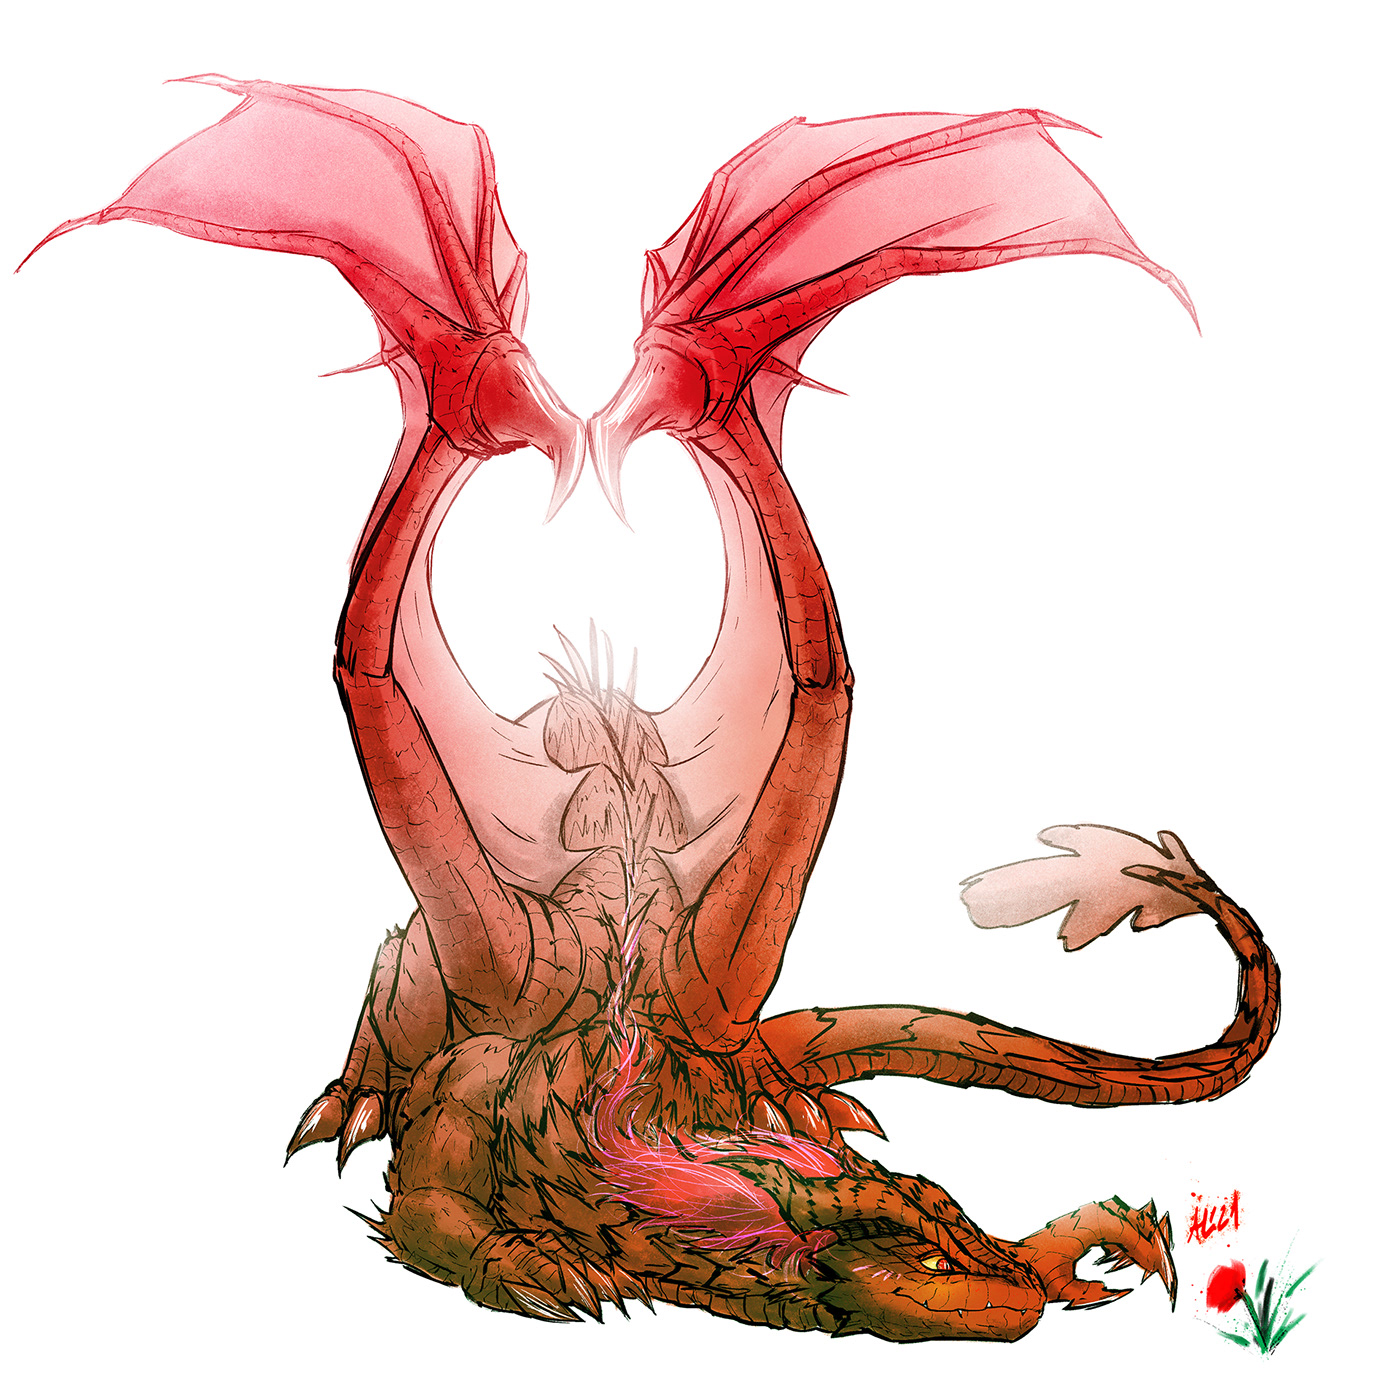 al characterdesign characters ComicArt creaturedesign dragon dragons dragonsgirls girls MonsterDesign